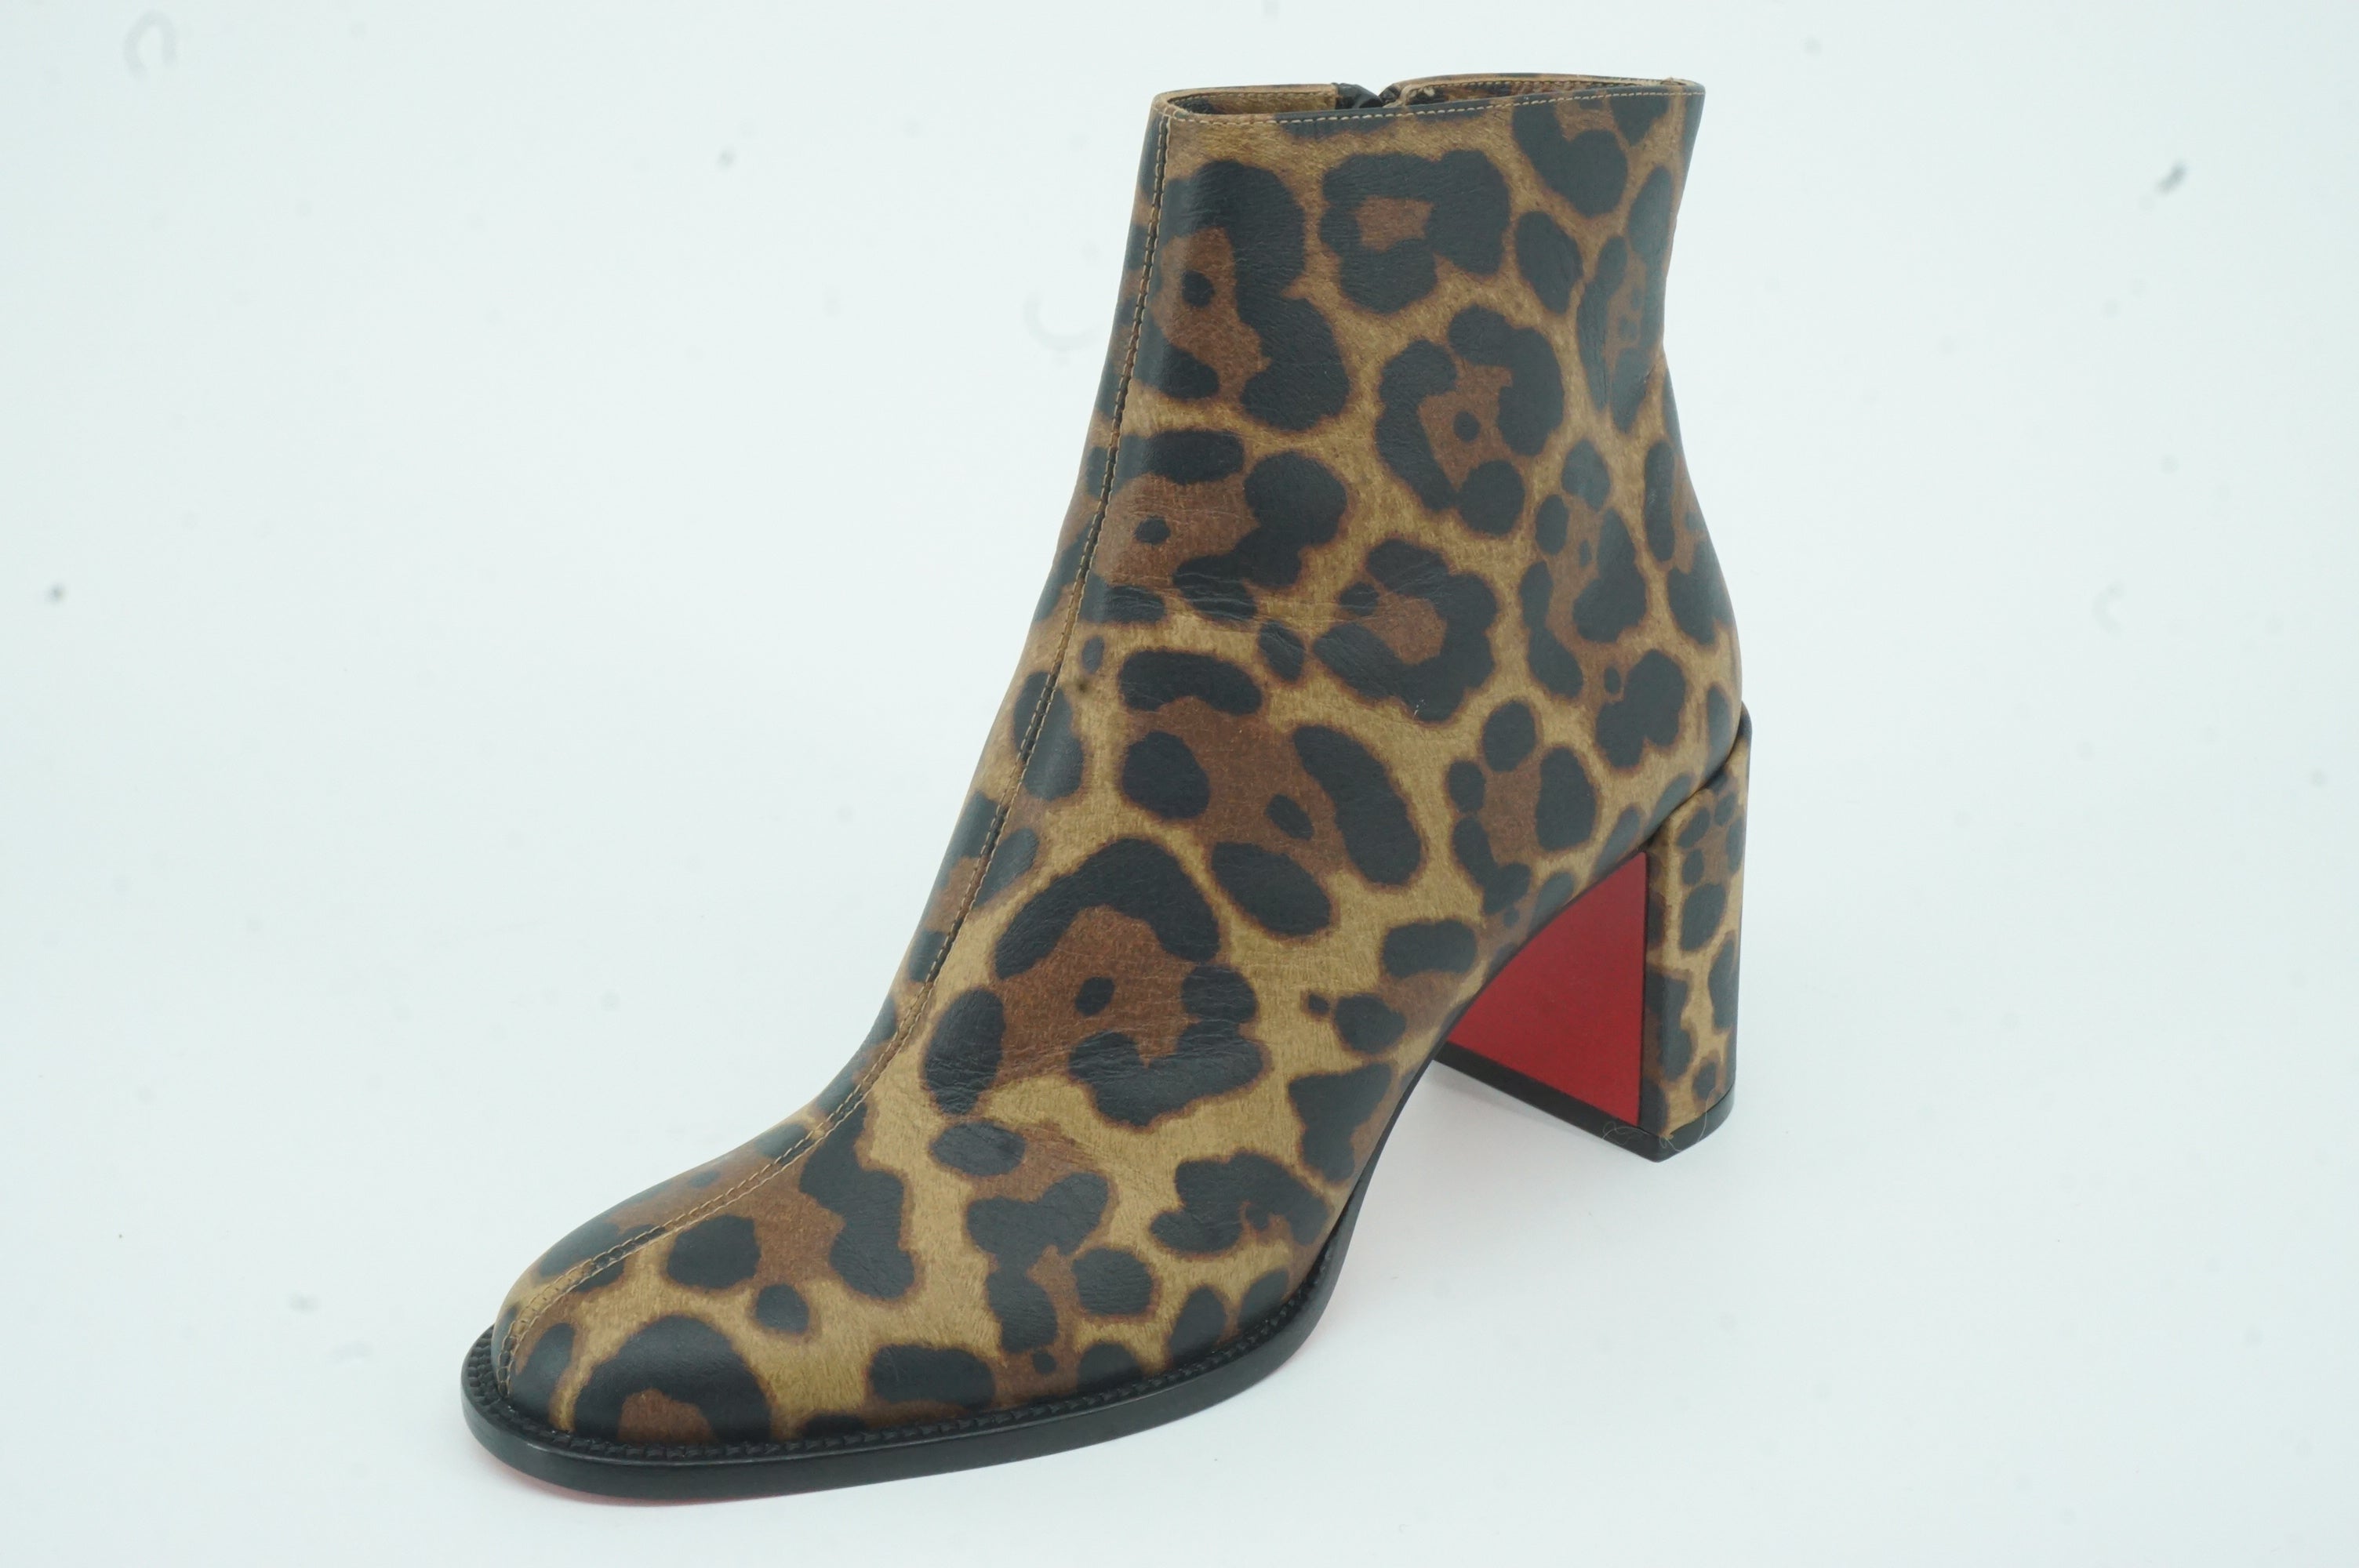 Christian Louboutin Adoxa 70 Ankle Bootie Size 37 NIB $1245 Leopard red bottom